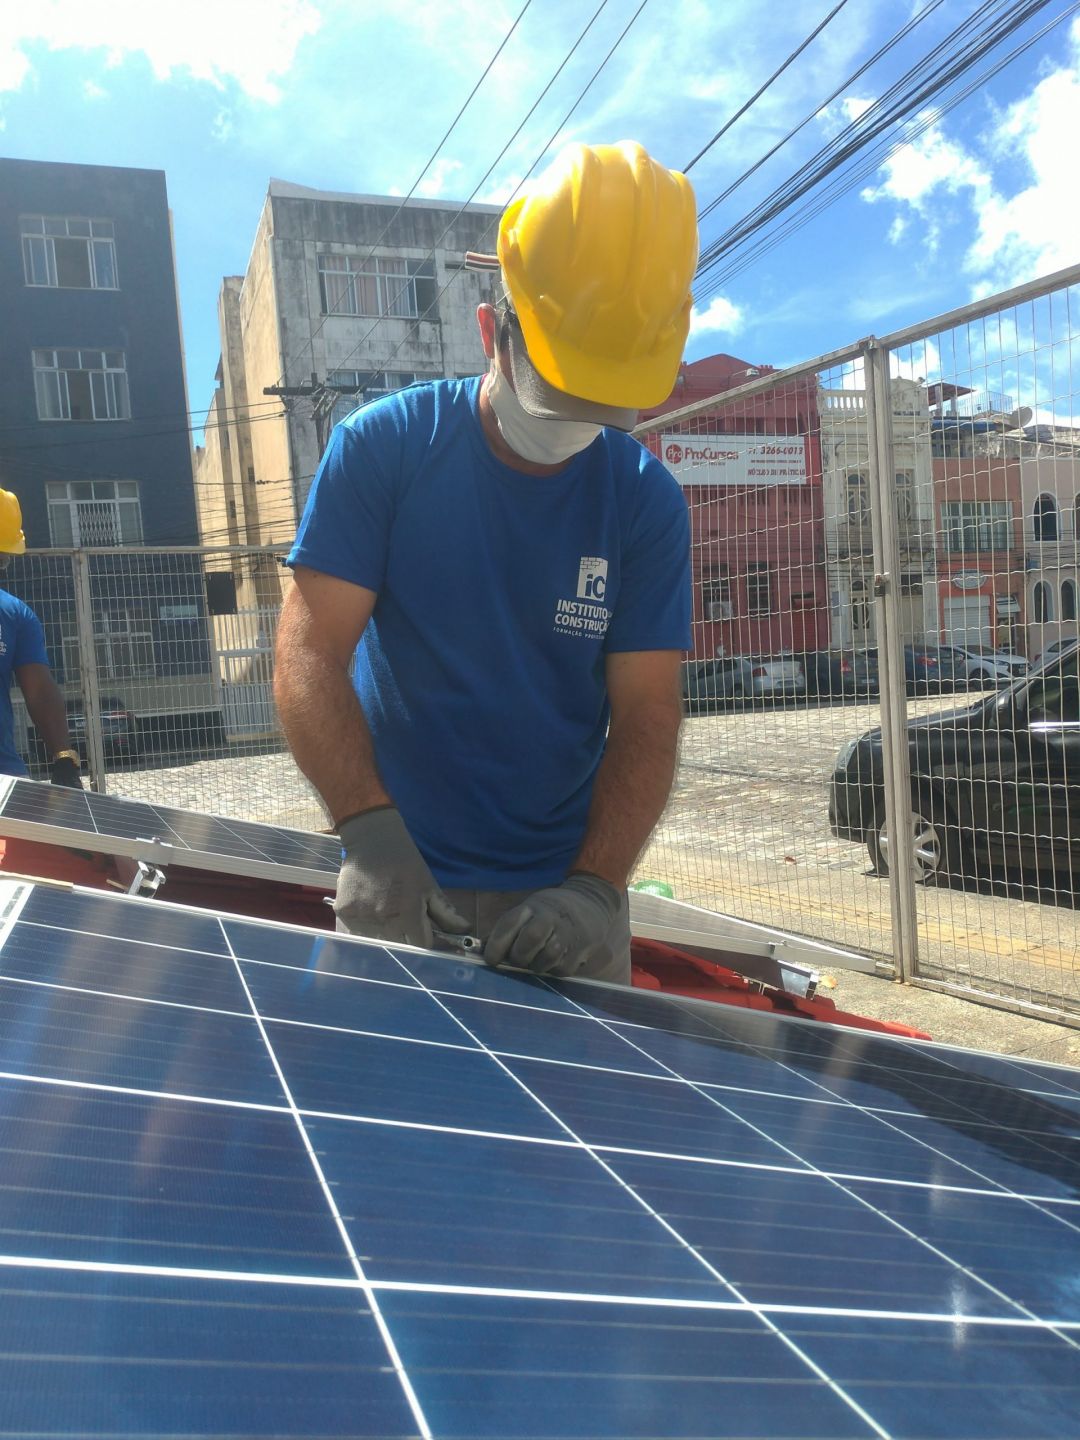 Recife – Curso Instalador de Energia Solar Fotovoltaica + NR35